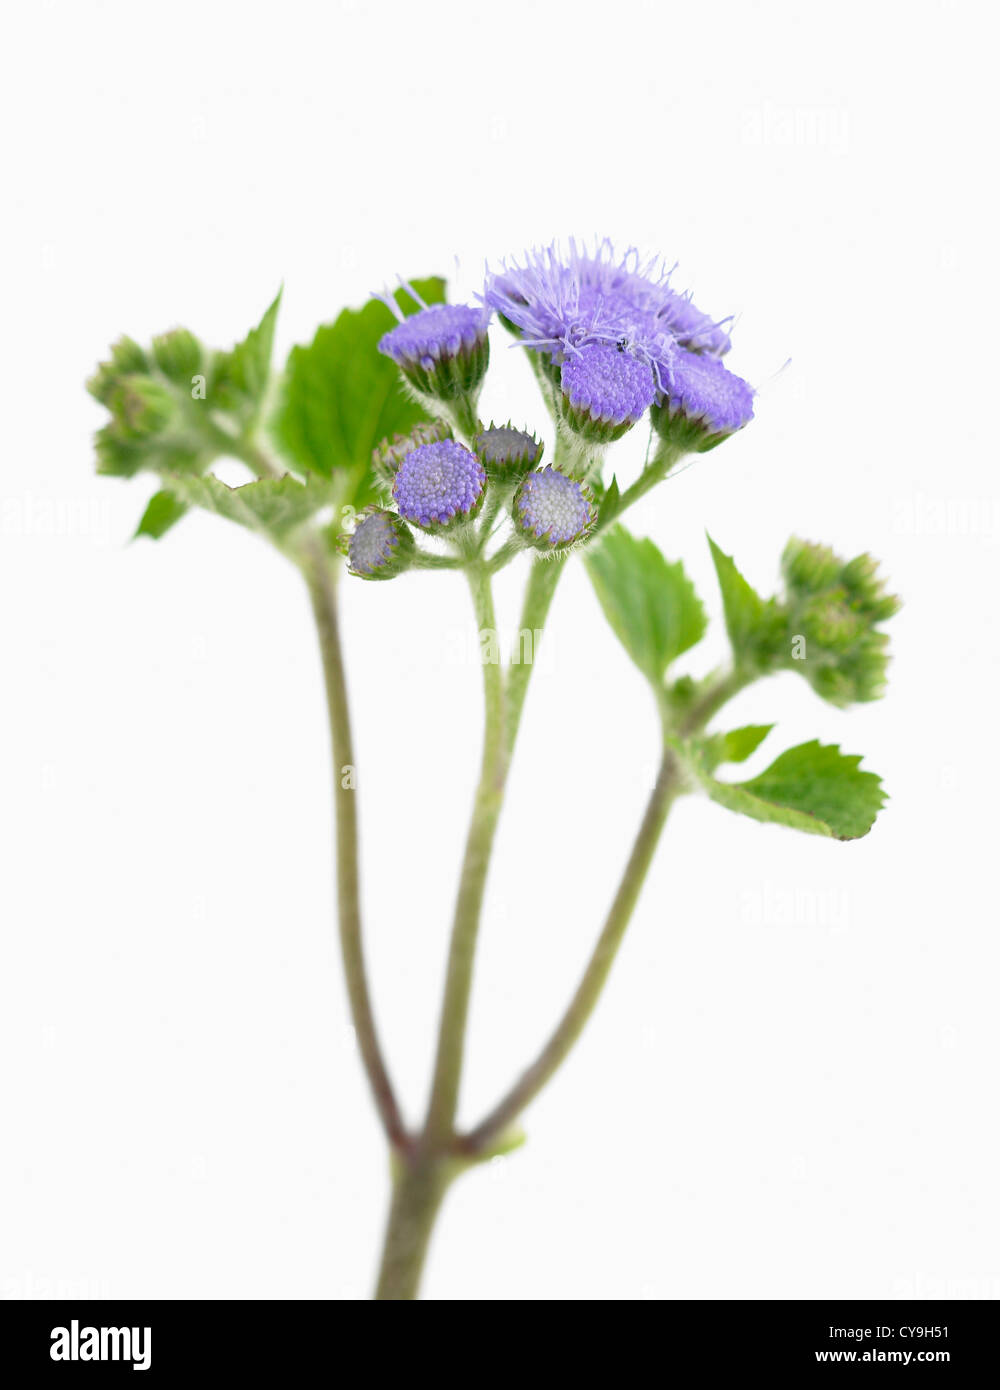 Ageratum Houstonianum Floss Flower Purple Blue Flowers And Leaves Stock Photo Alamy